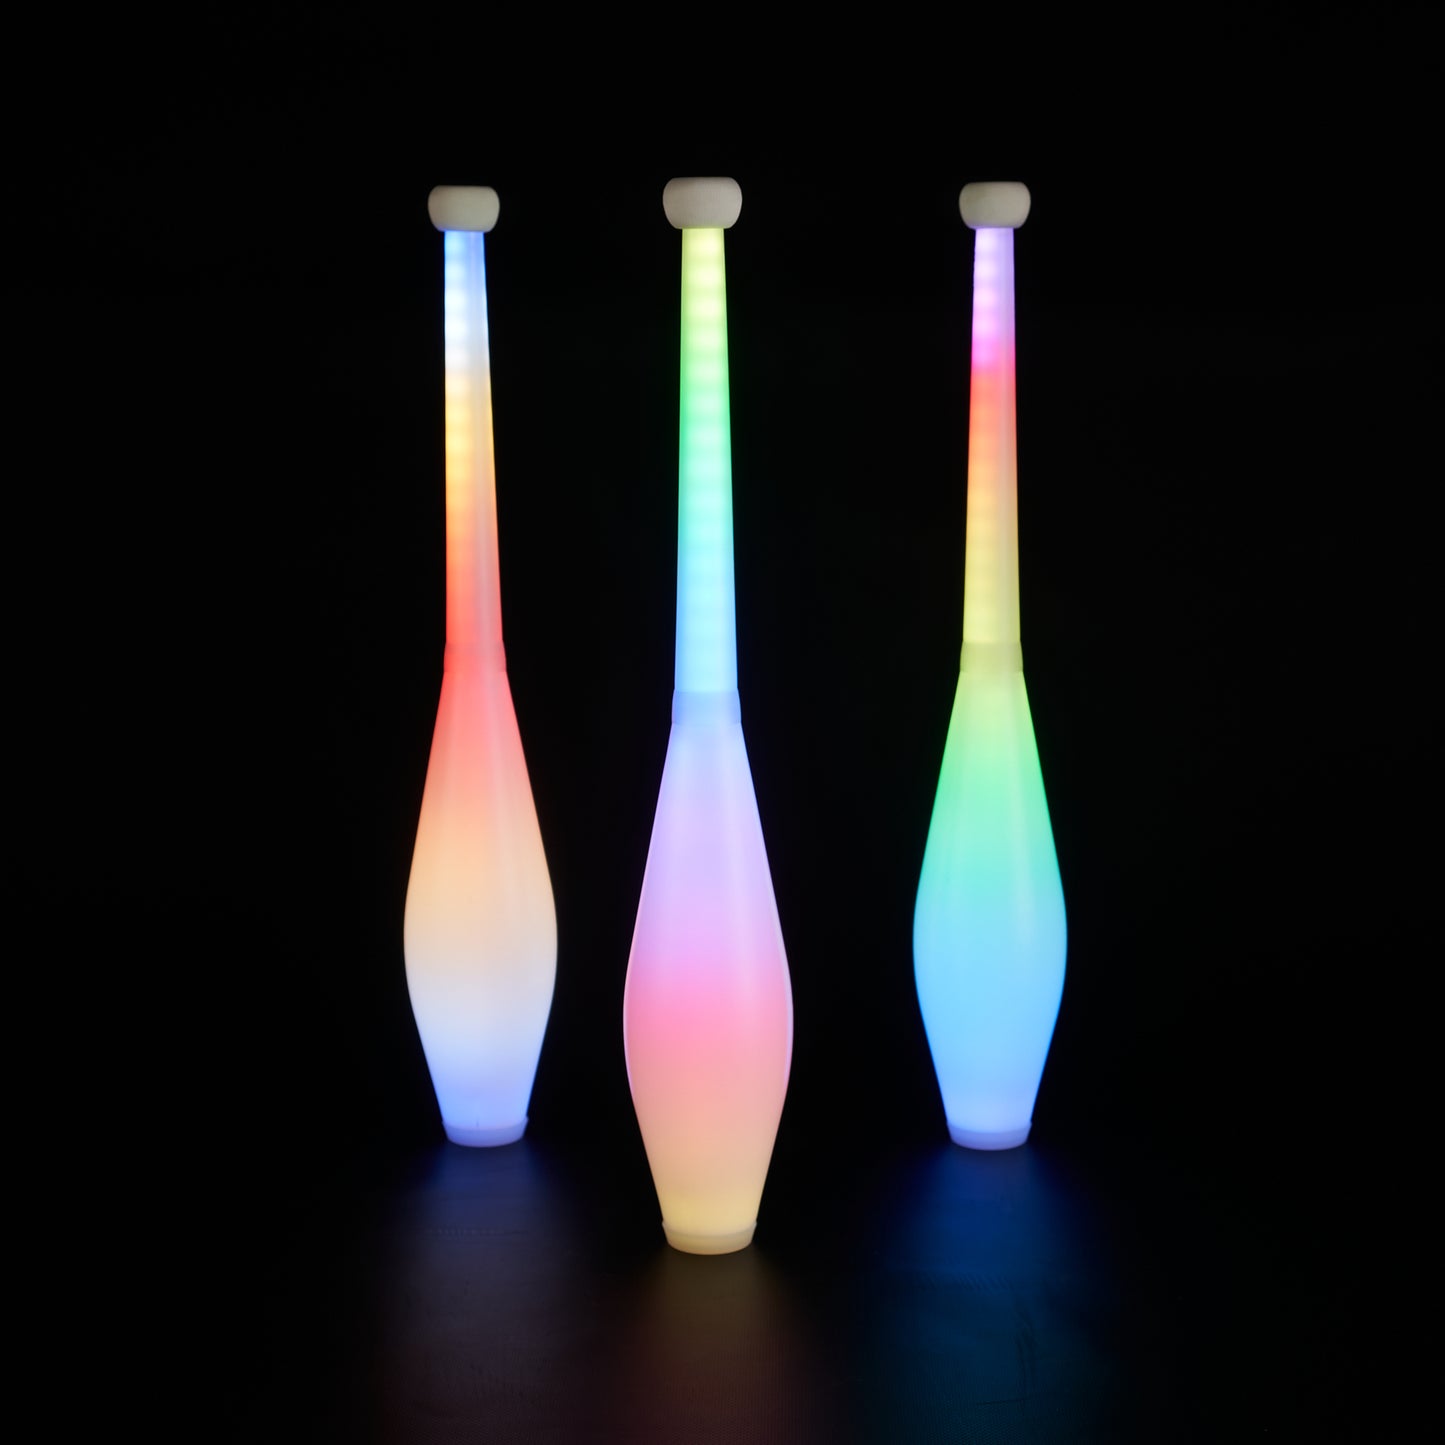 Flowtoys Vision® LED Juggling Club - Each